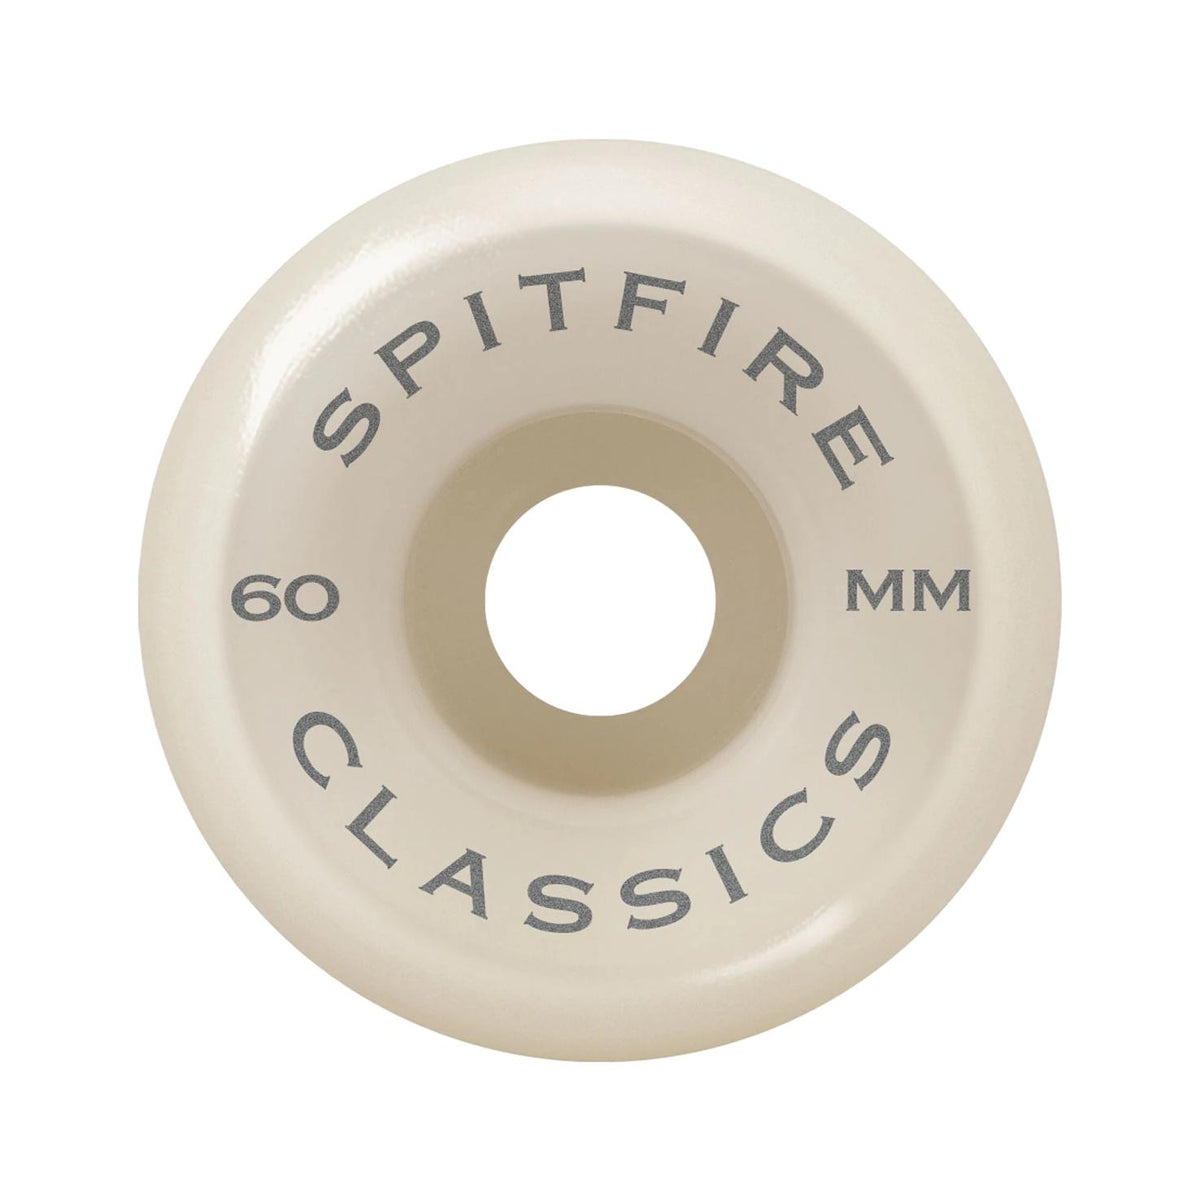 Spitfire Classic 60mm Wheels - Venue Skateboards